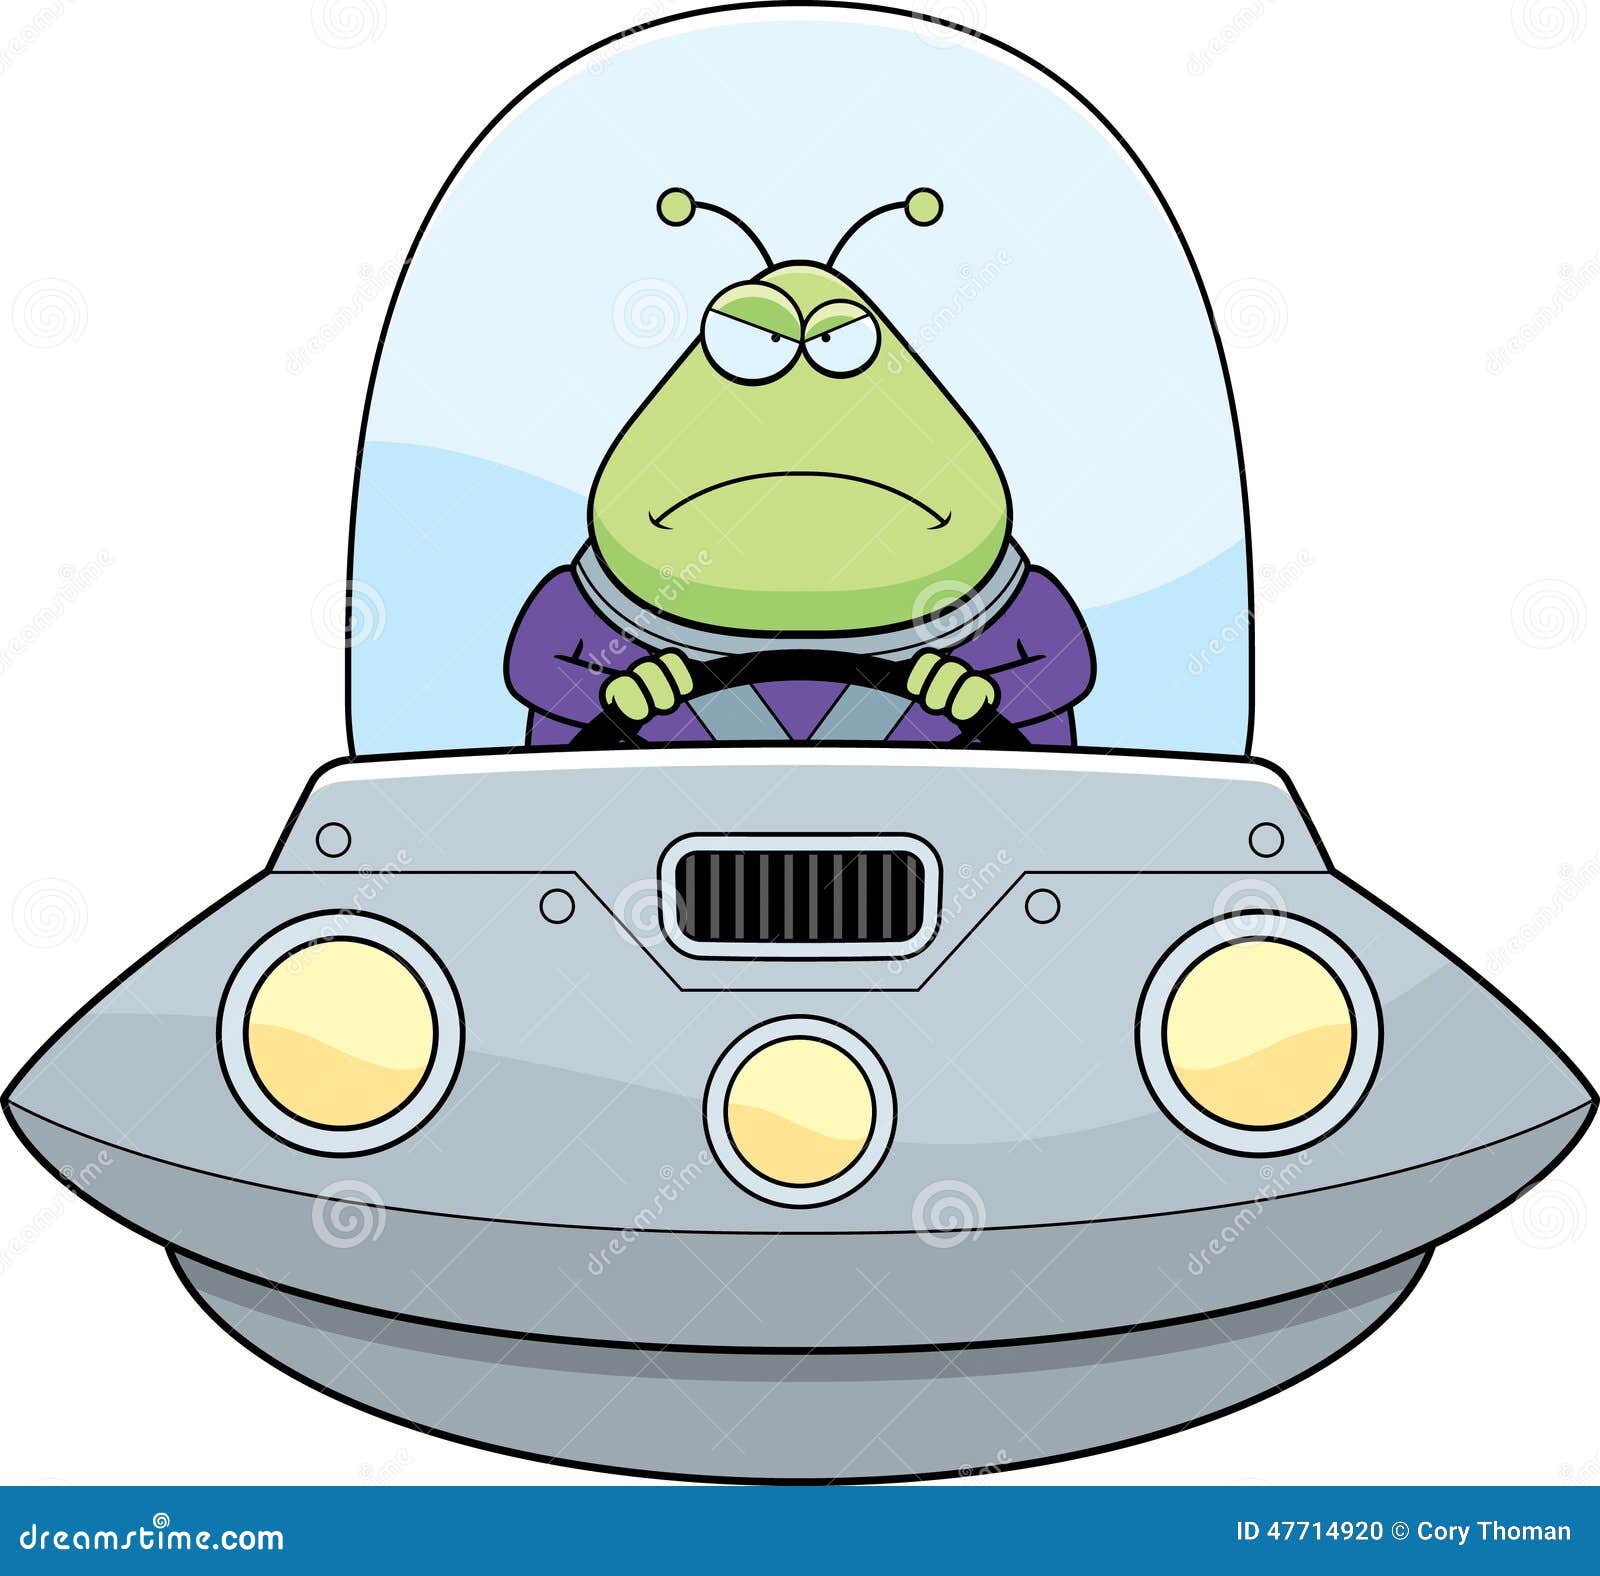 Angry Cartoon Alien UFO stock vector. Illustration of ...